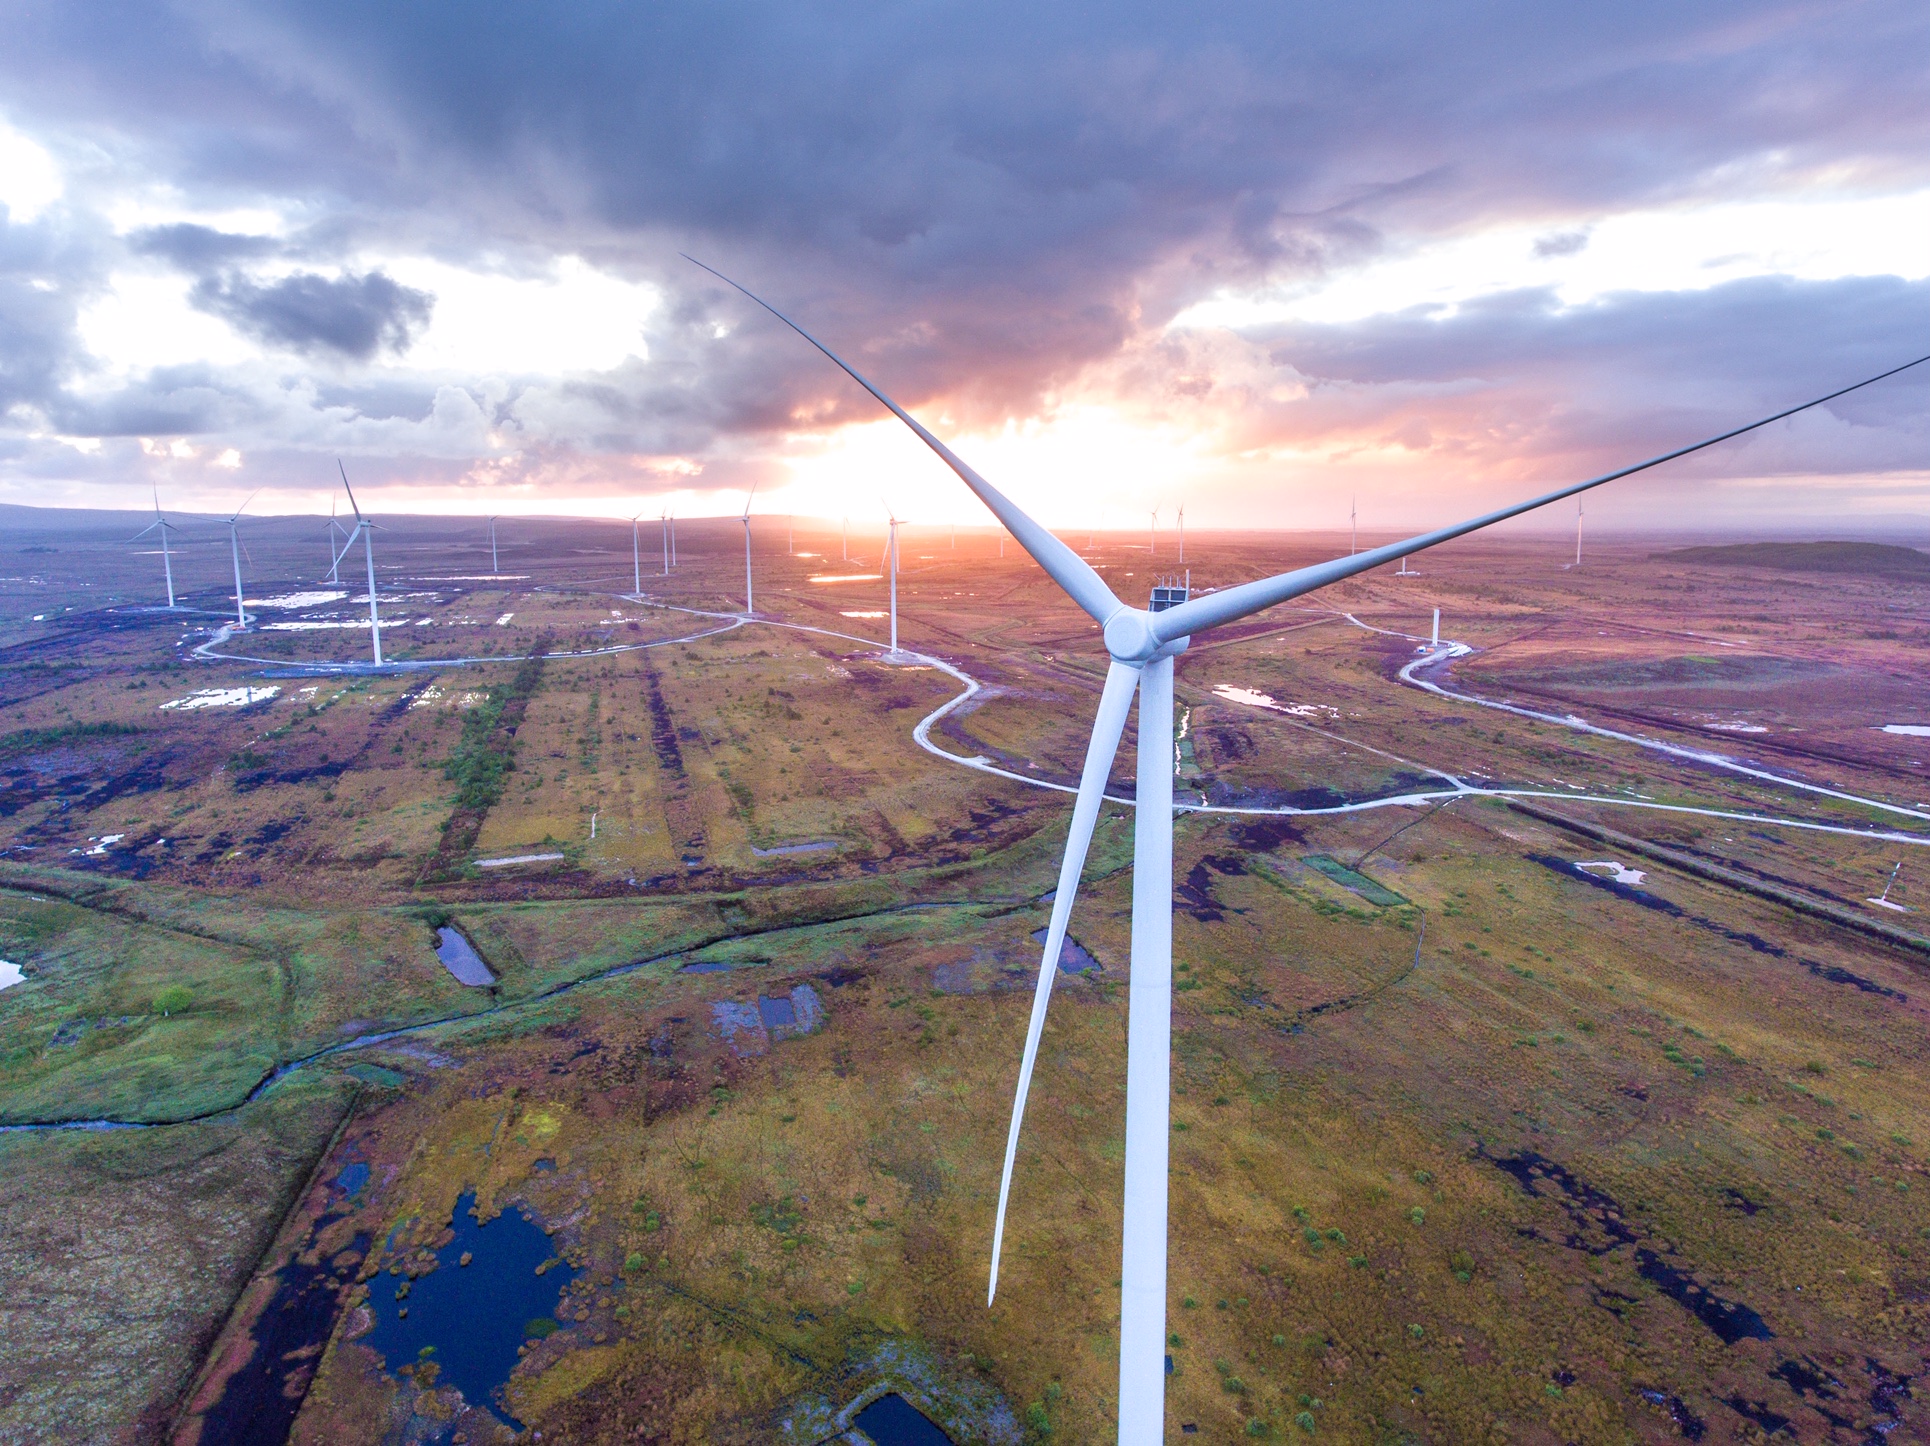 A large wind farm with multiple turbines in Irish landscape